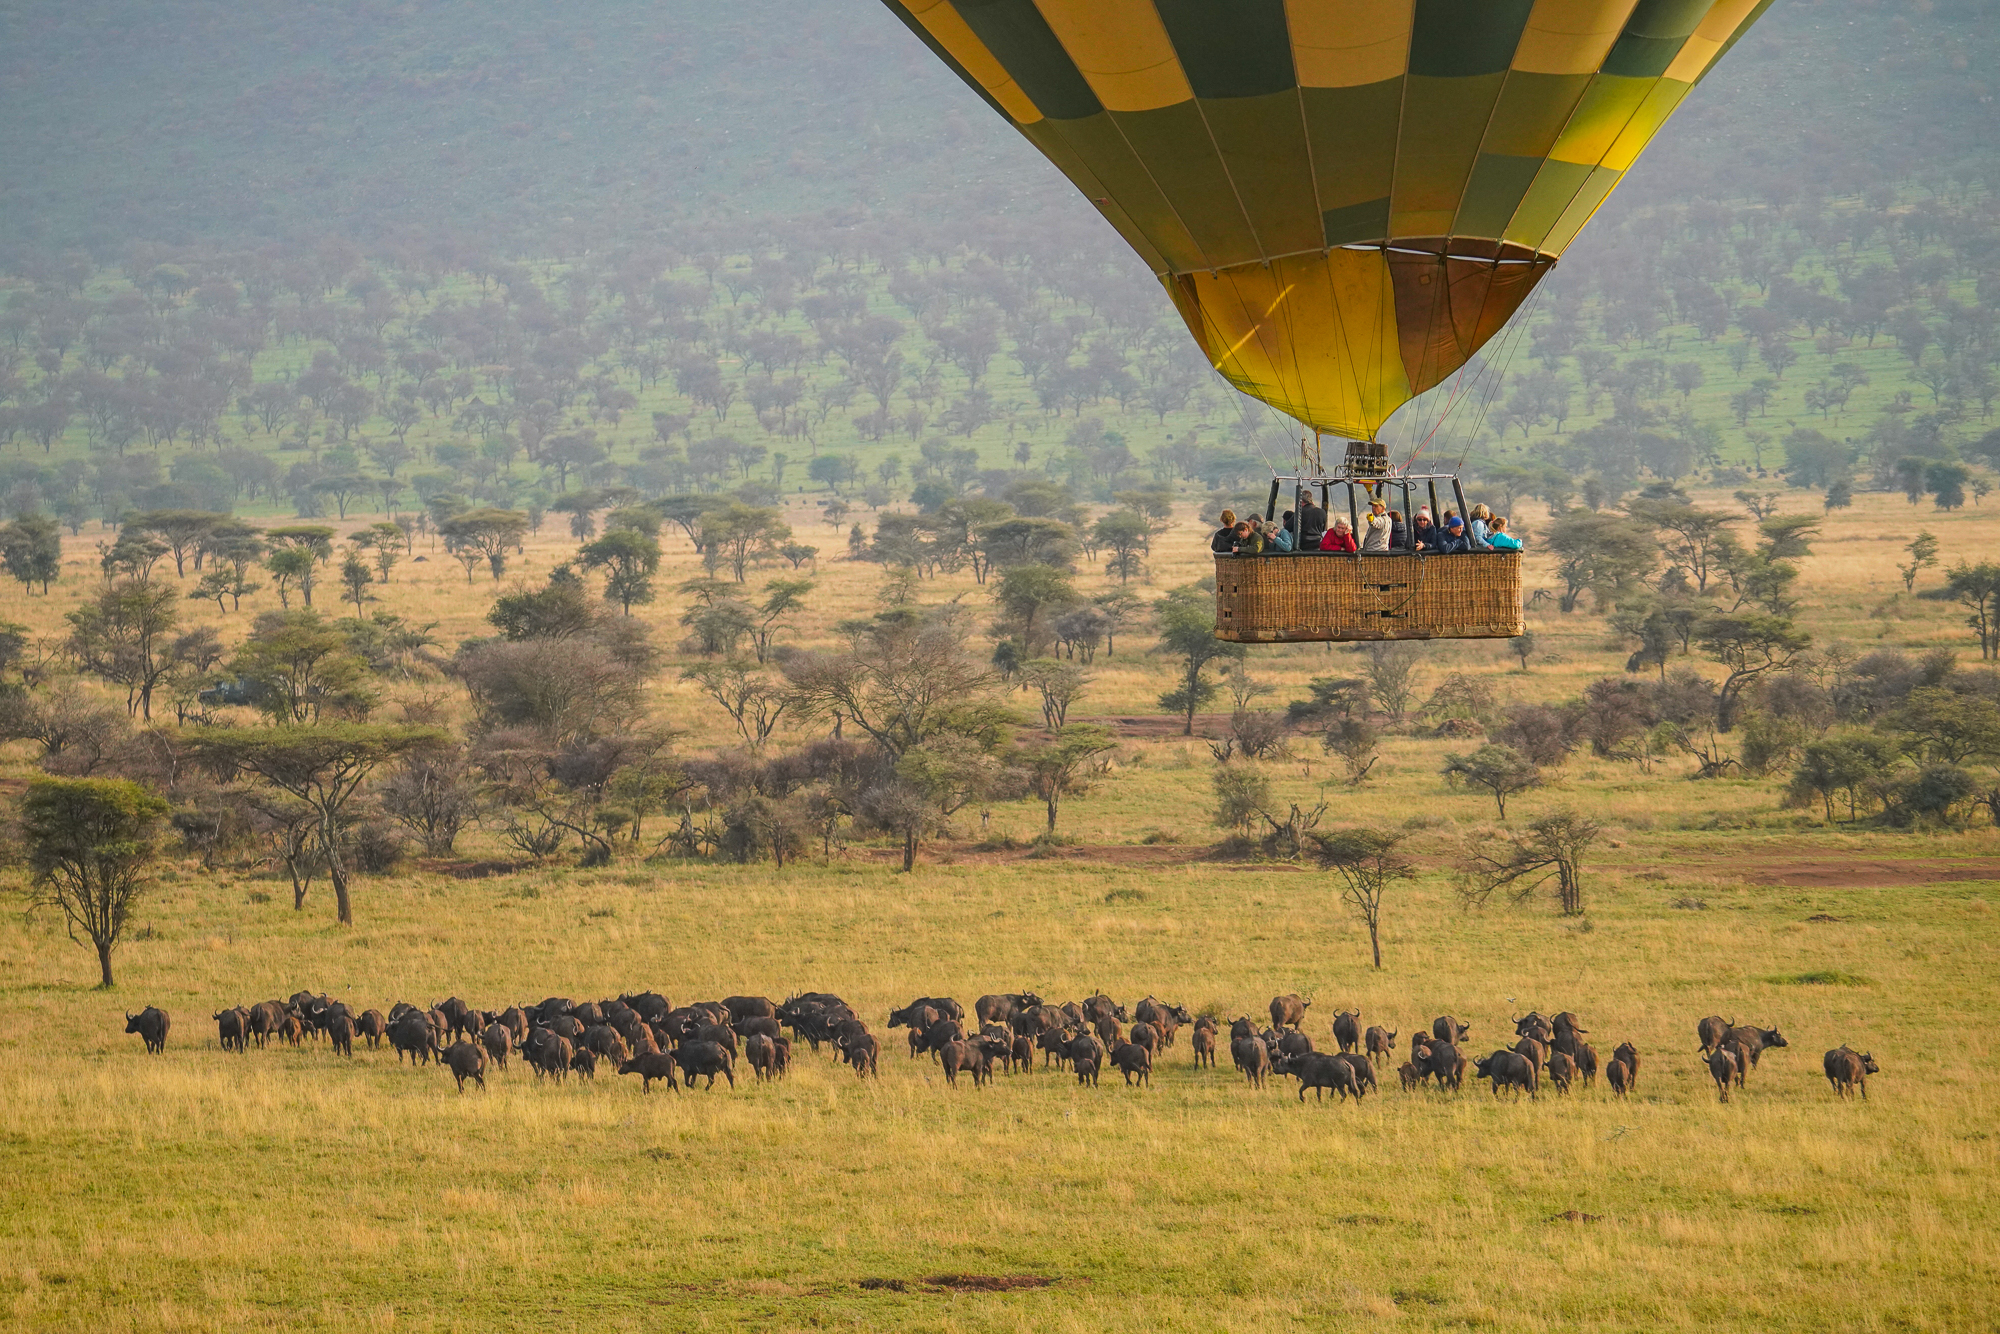 Hot Air Balloon Safari in the Serengeti